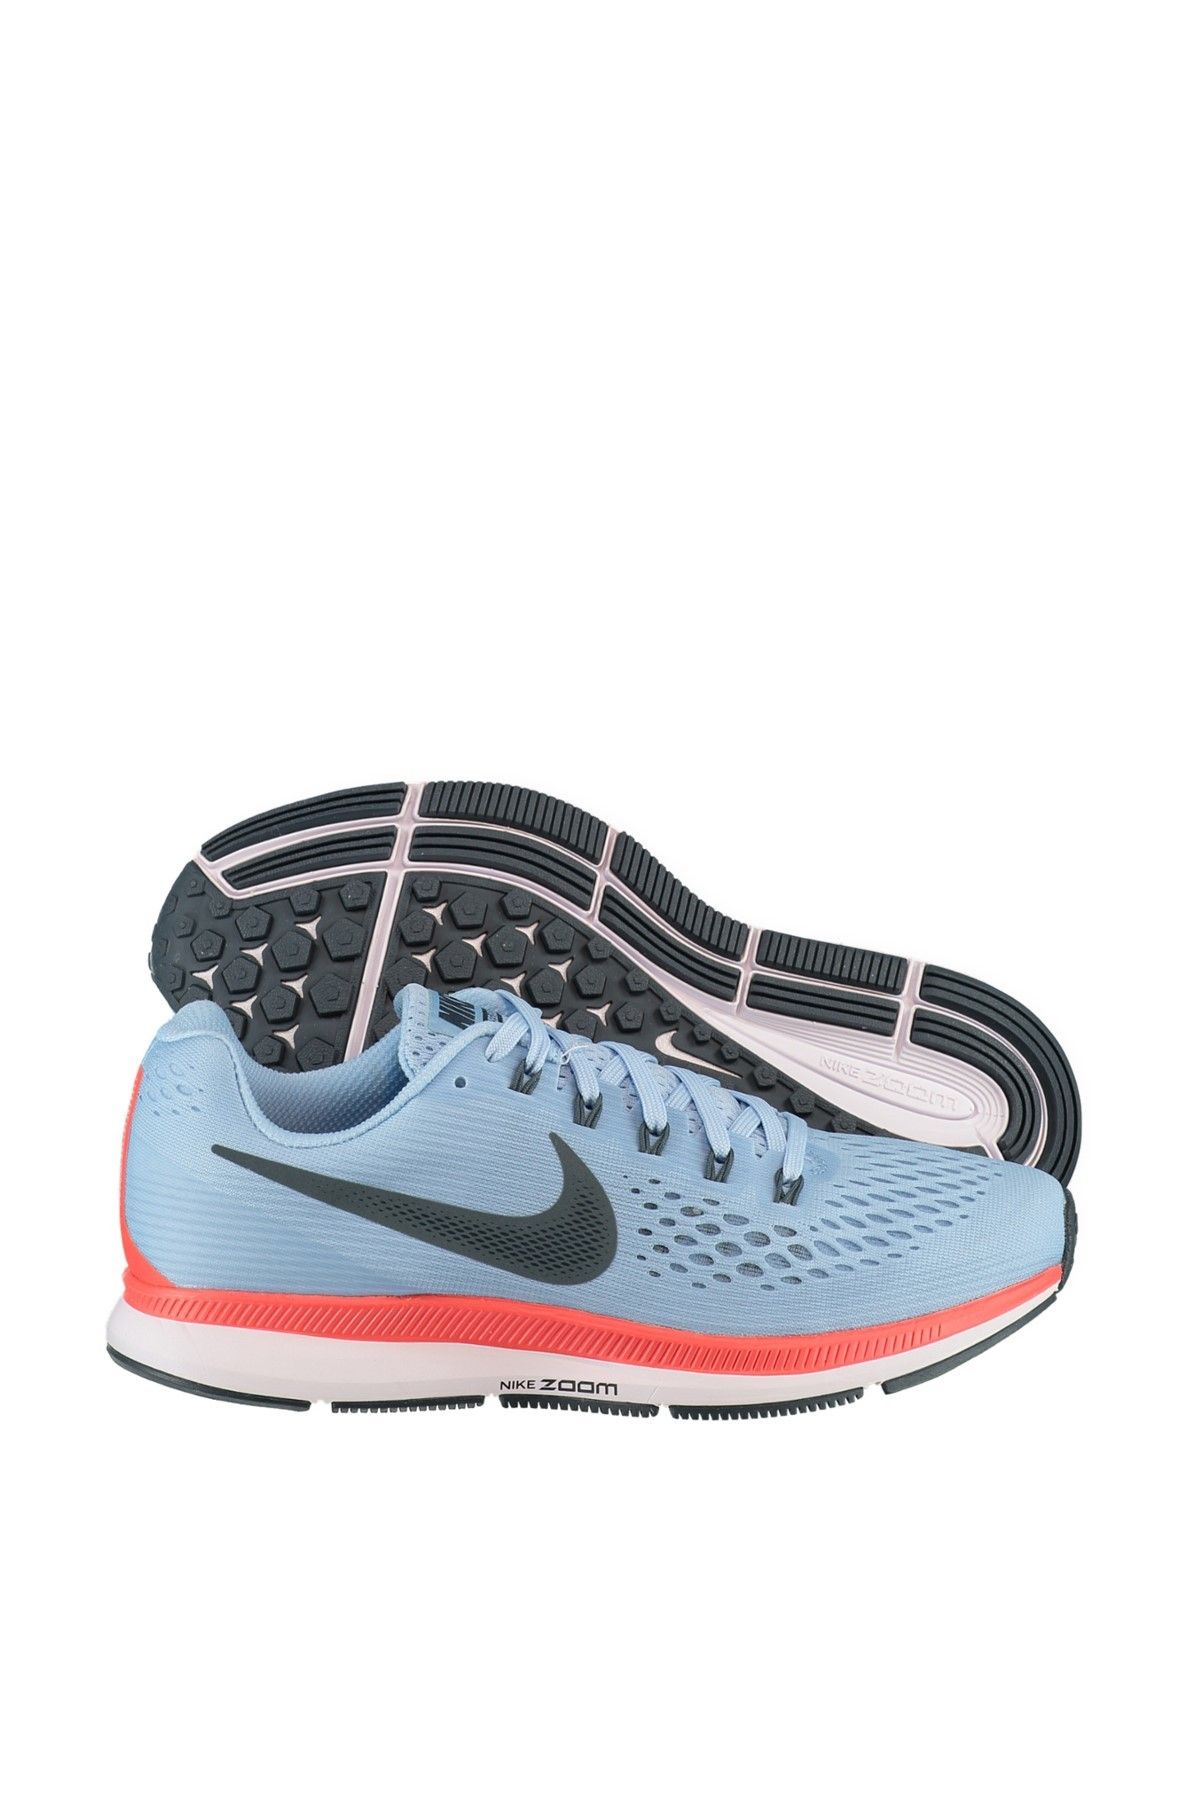 Nike Kadın Koşu Ayakkabı - Air Zoom Pegasus 34 - 880560-404